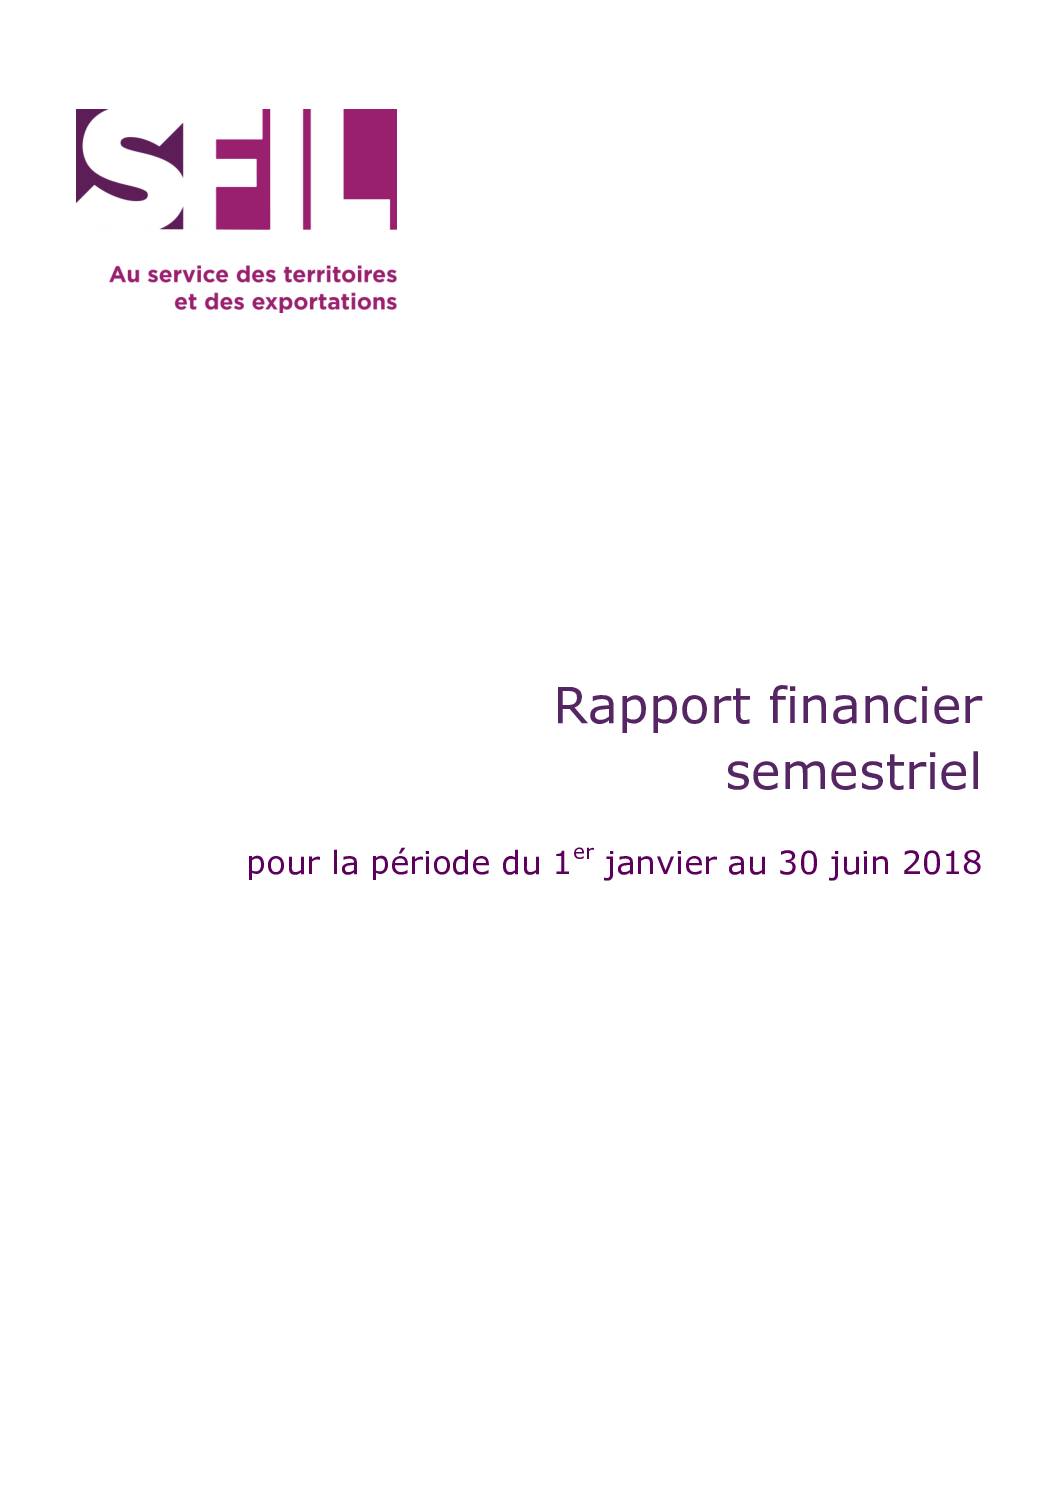 Le rapport financier semestriel Sfil 2018 est disponible